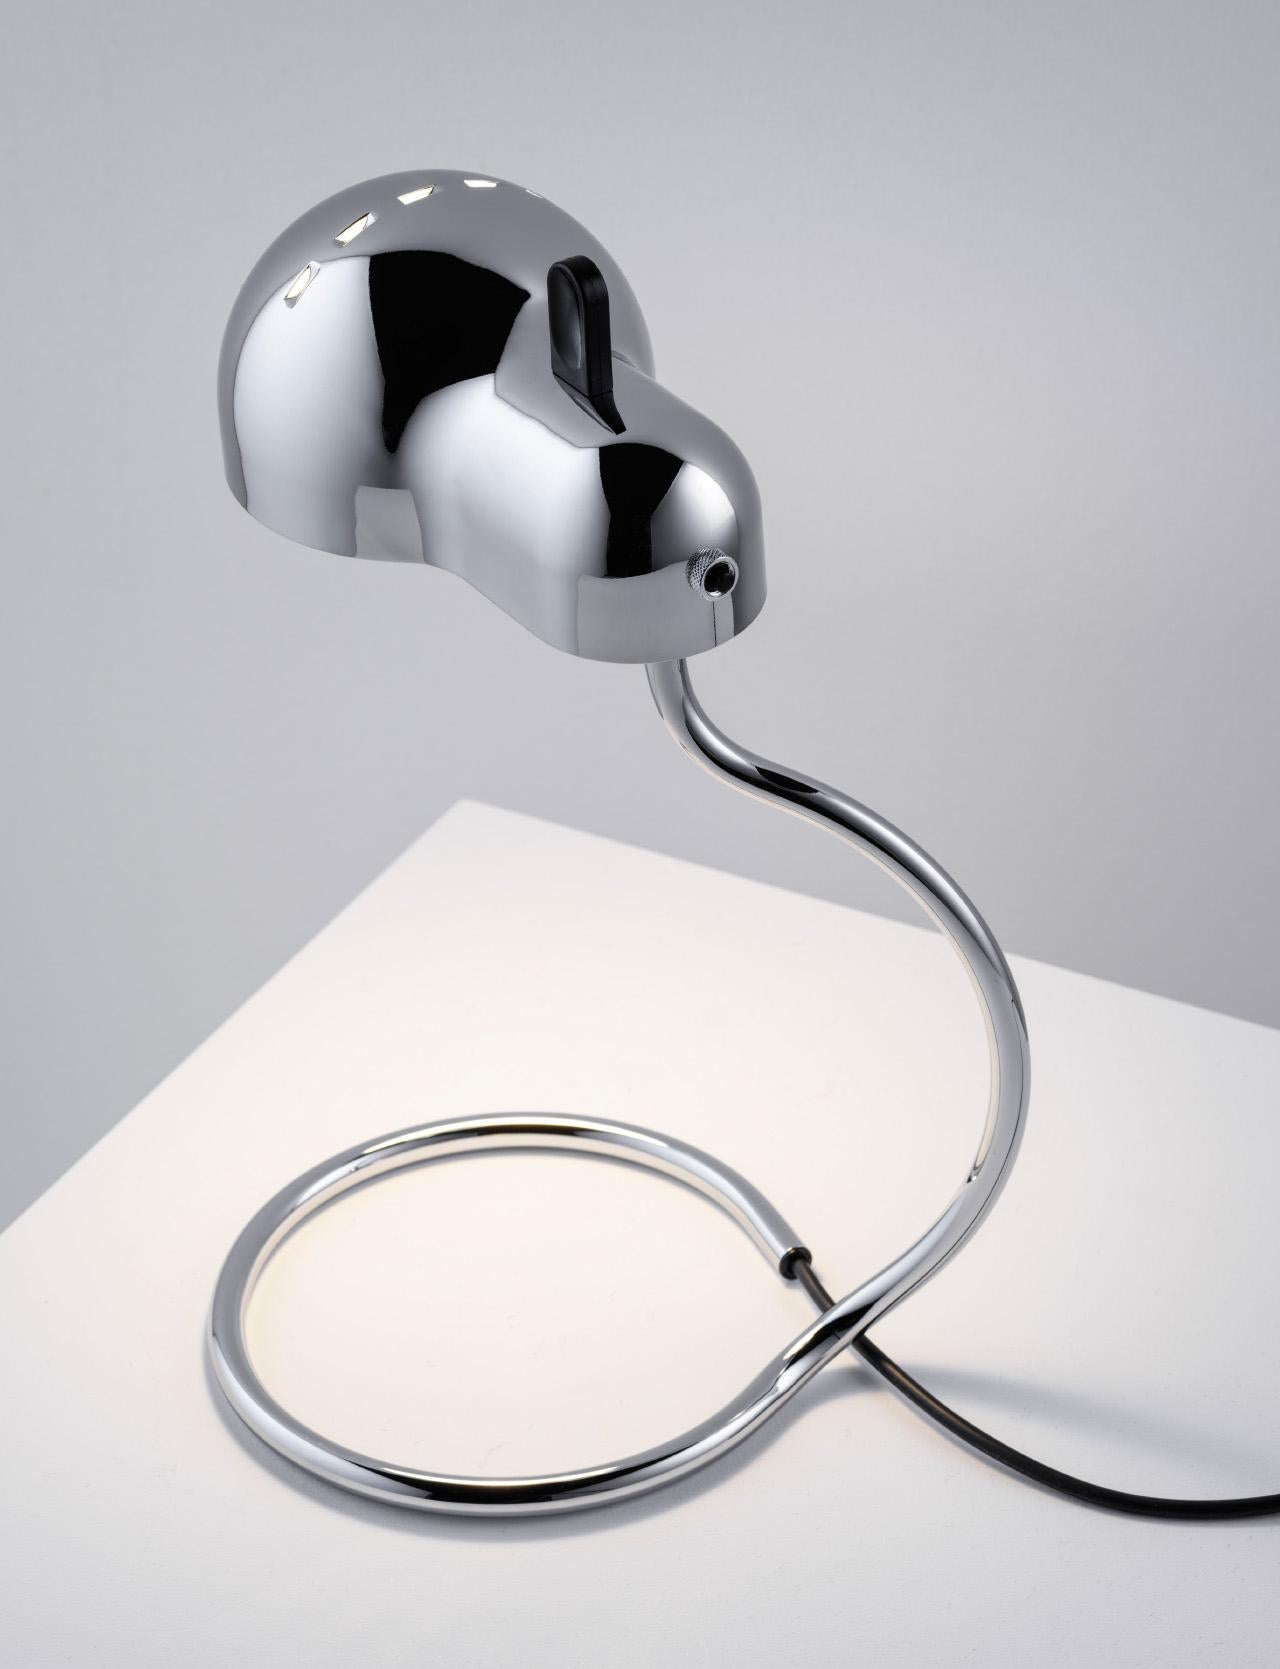 Joe Colombo 'Minitopo' Table Lamp in White and Chrome for Stilnovo For Sale 4